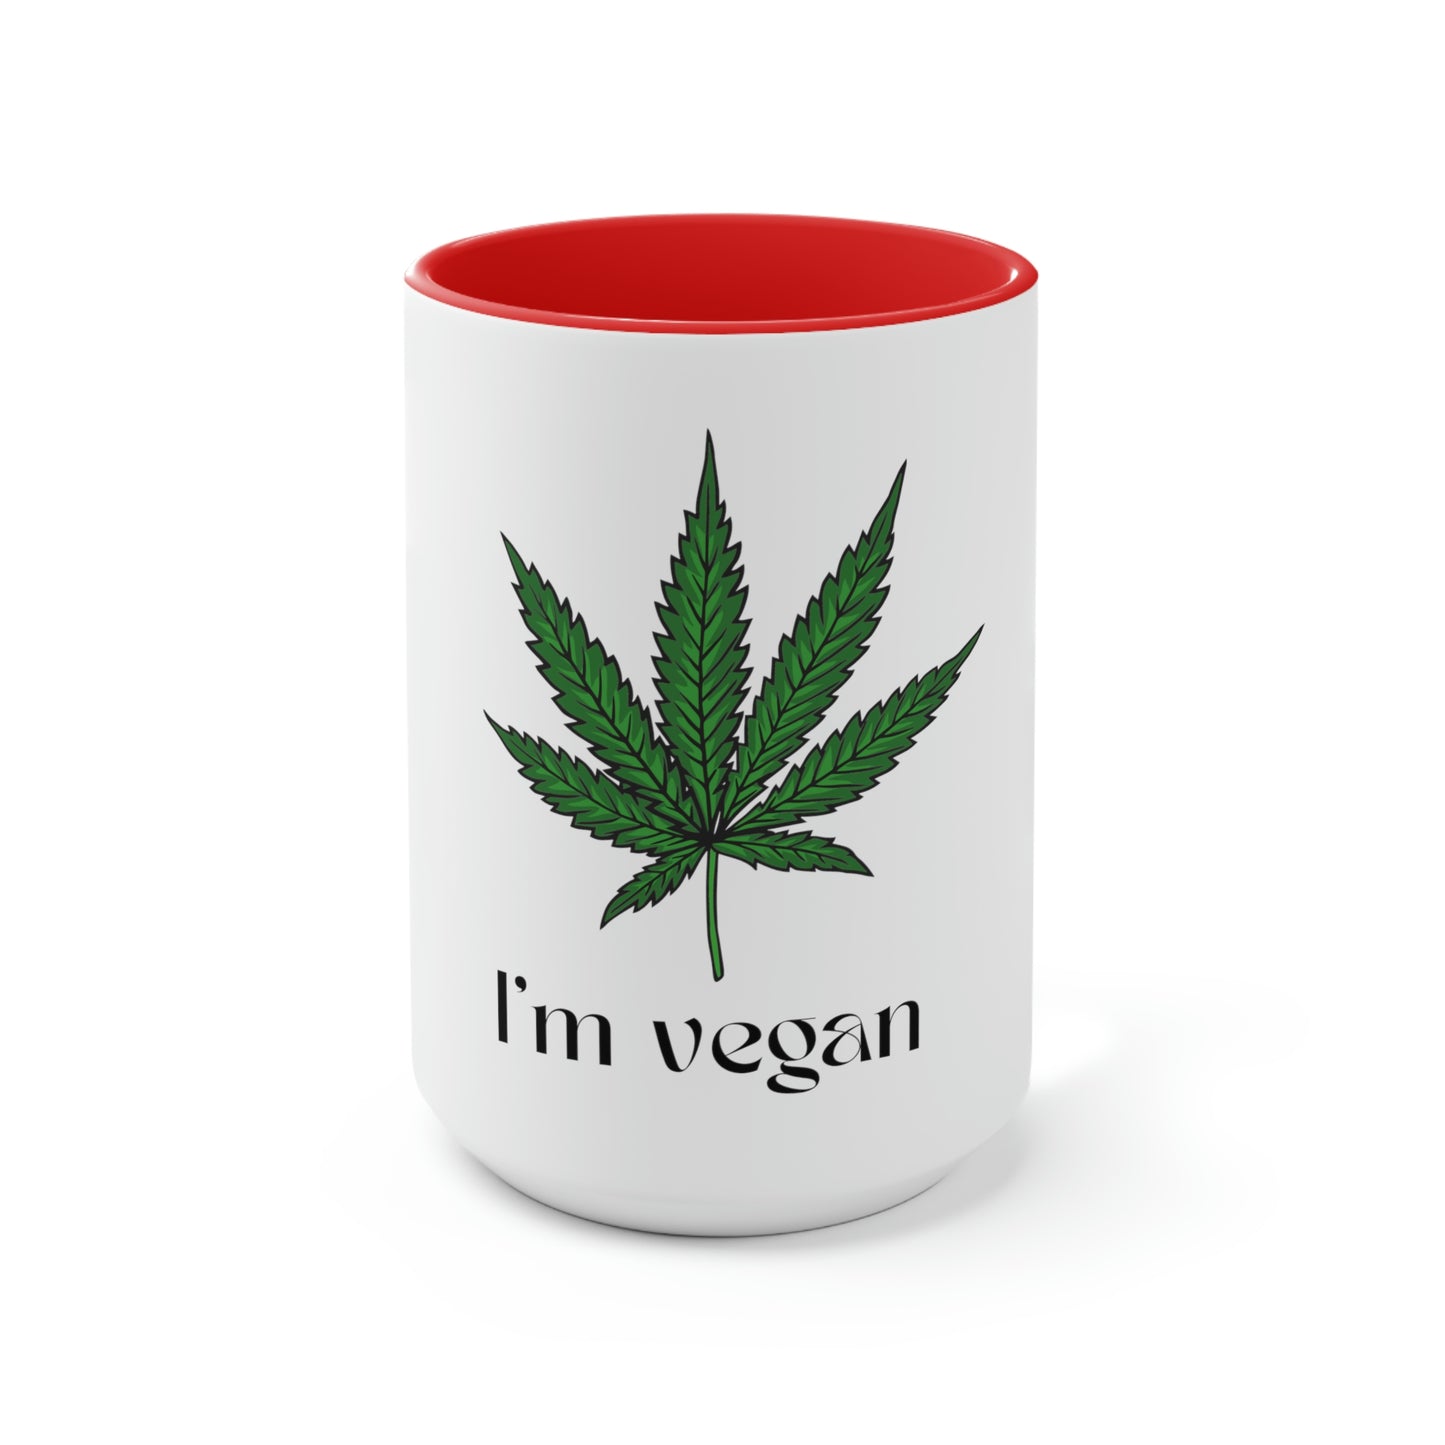 A white and red "I'm vegan" cannabis coffee mug